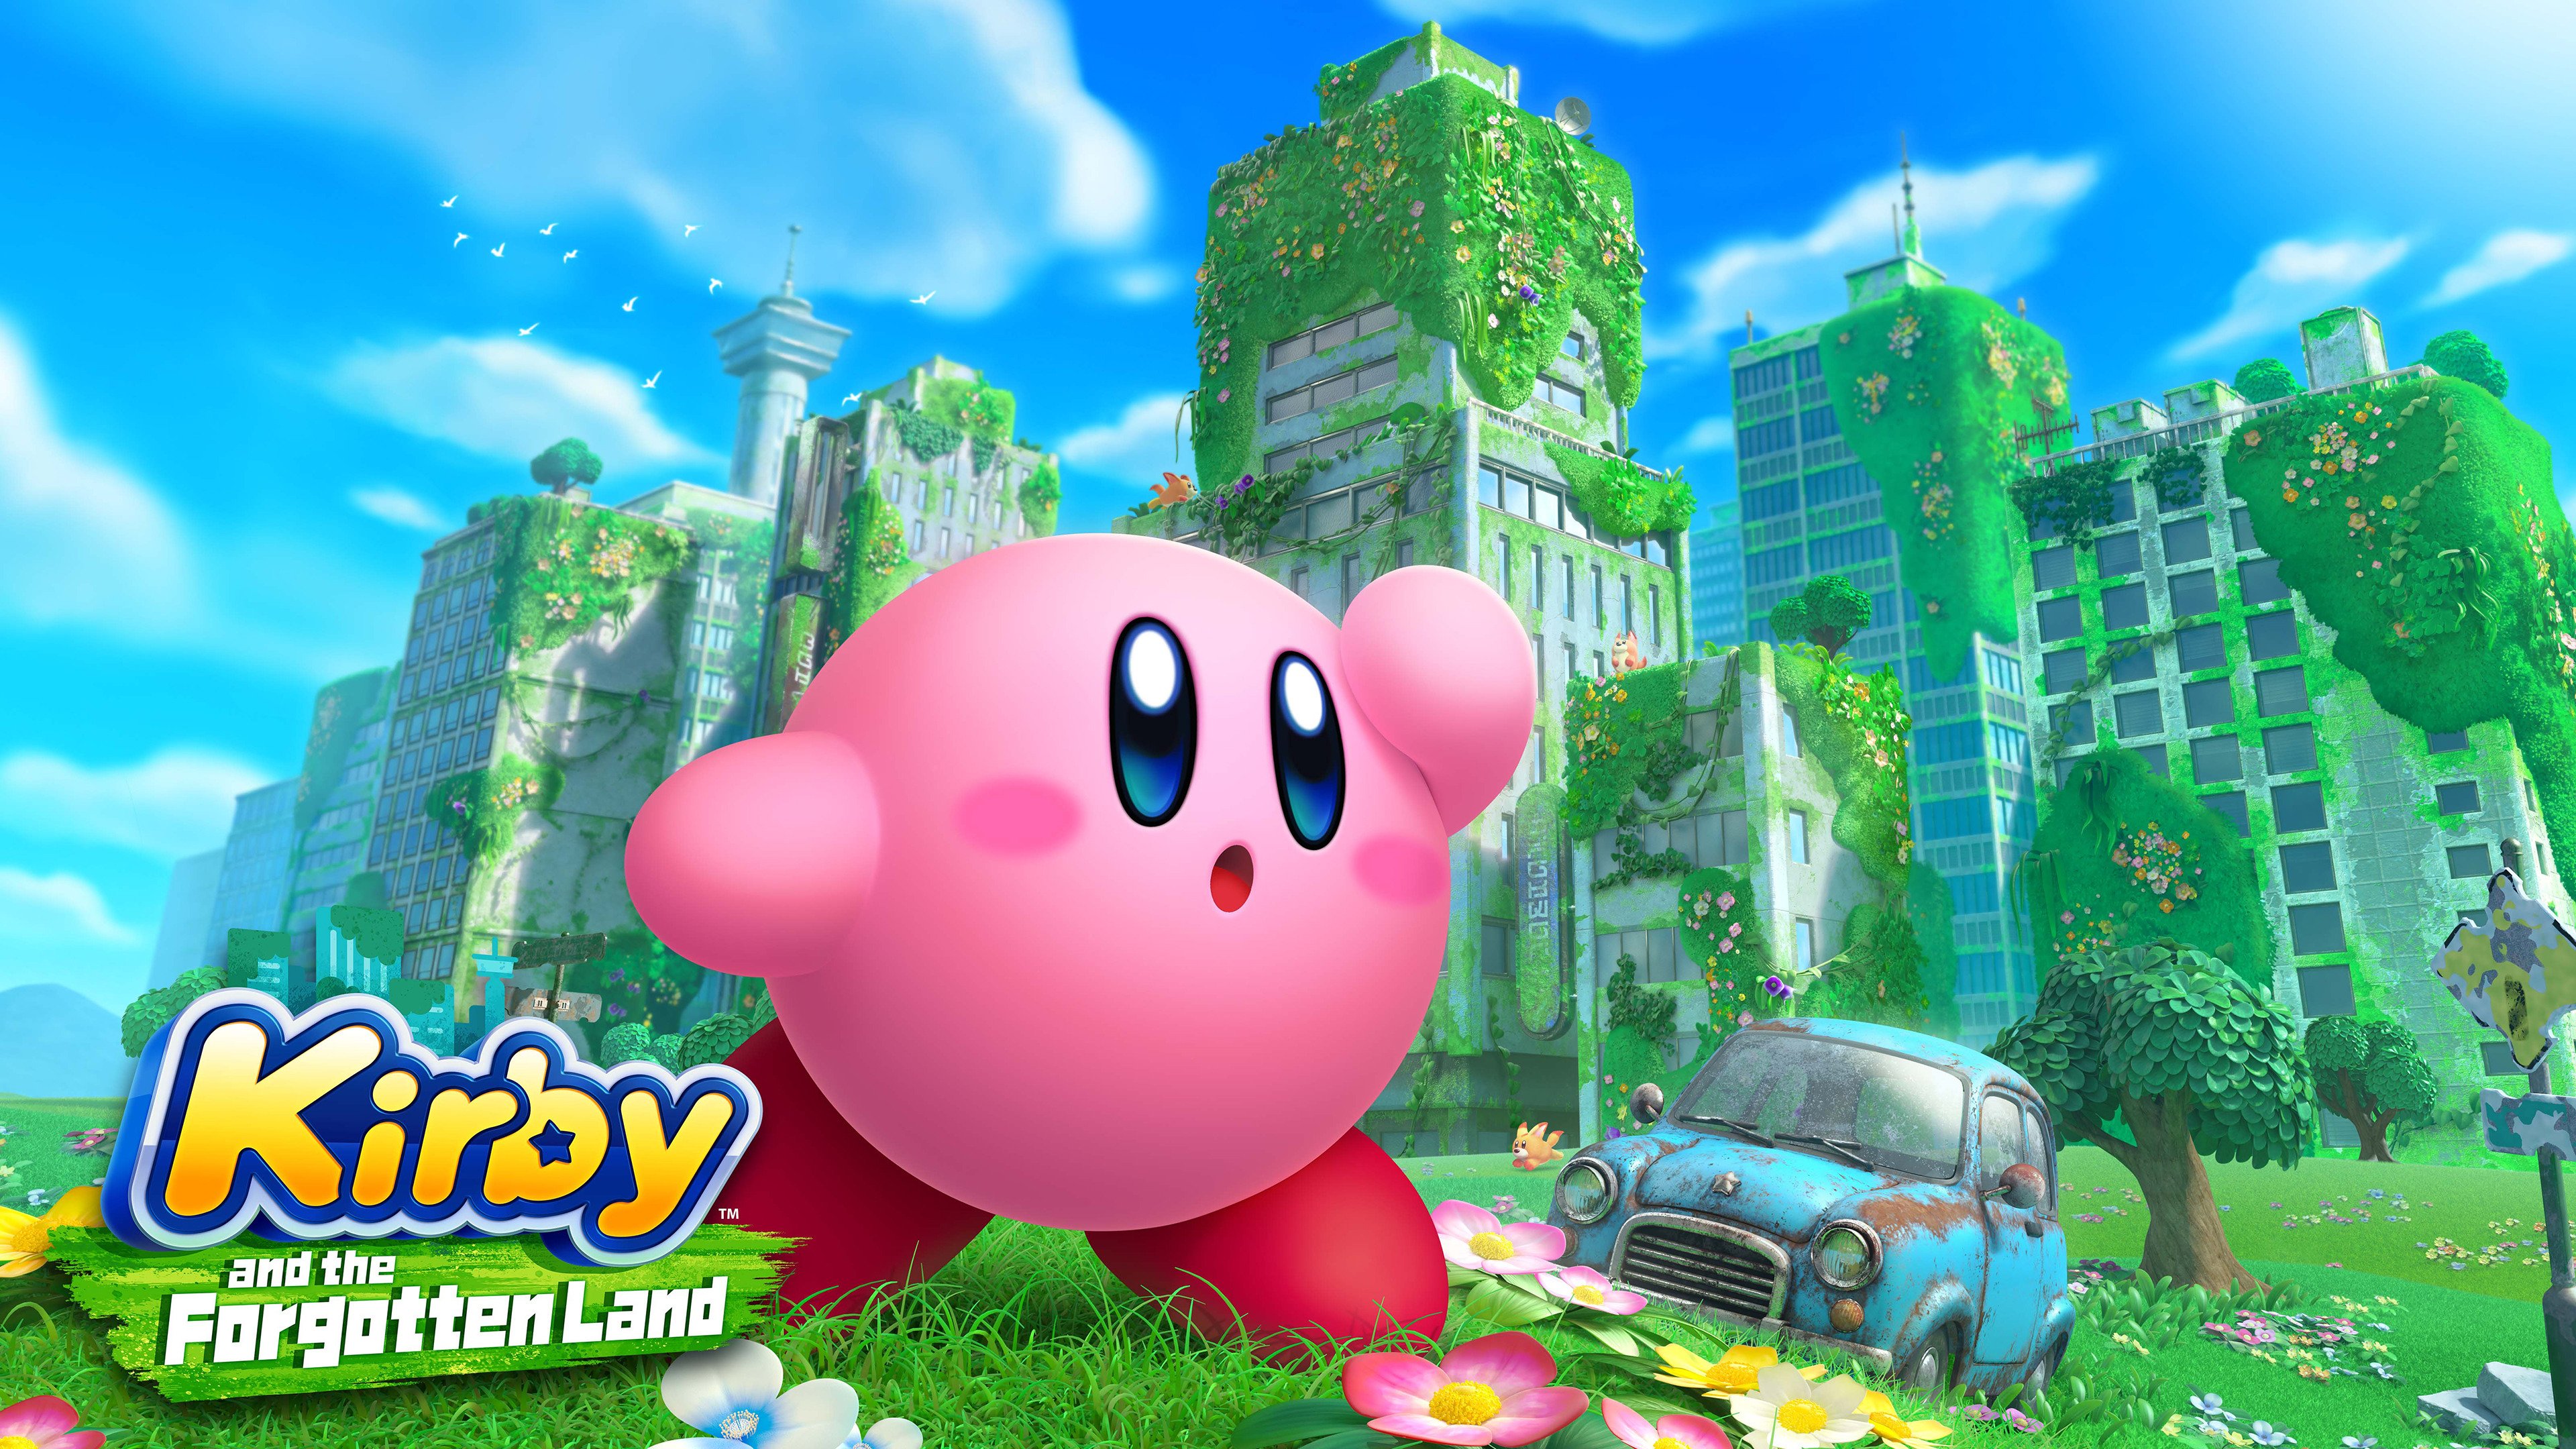 Fondos de pantalla Kirby and the forgotten land